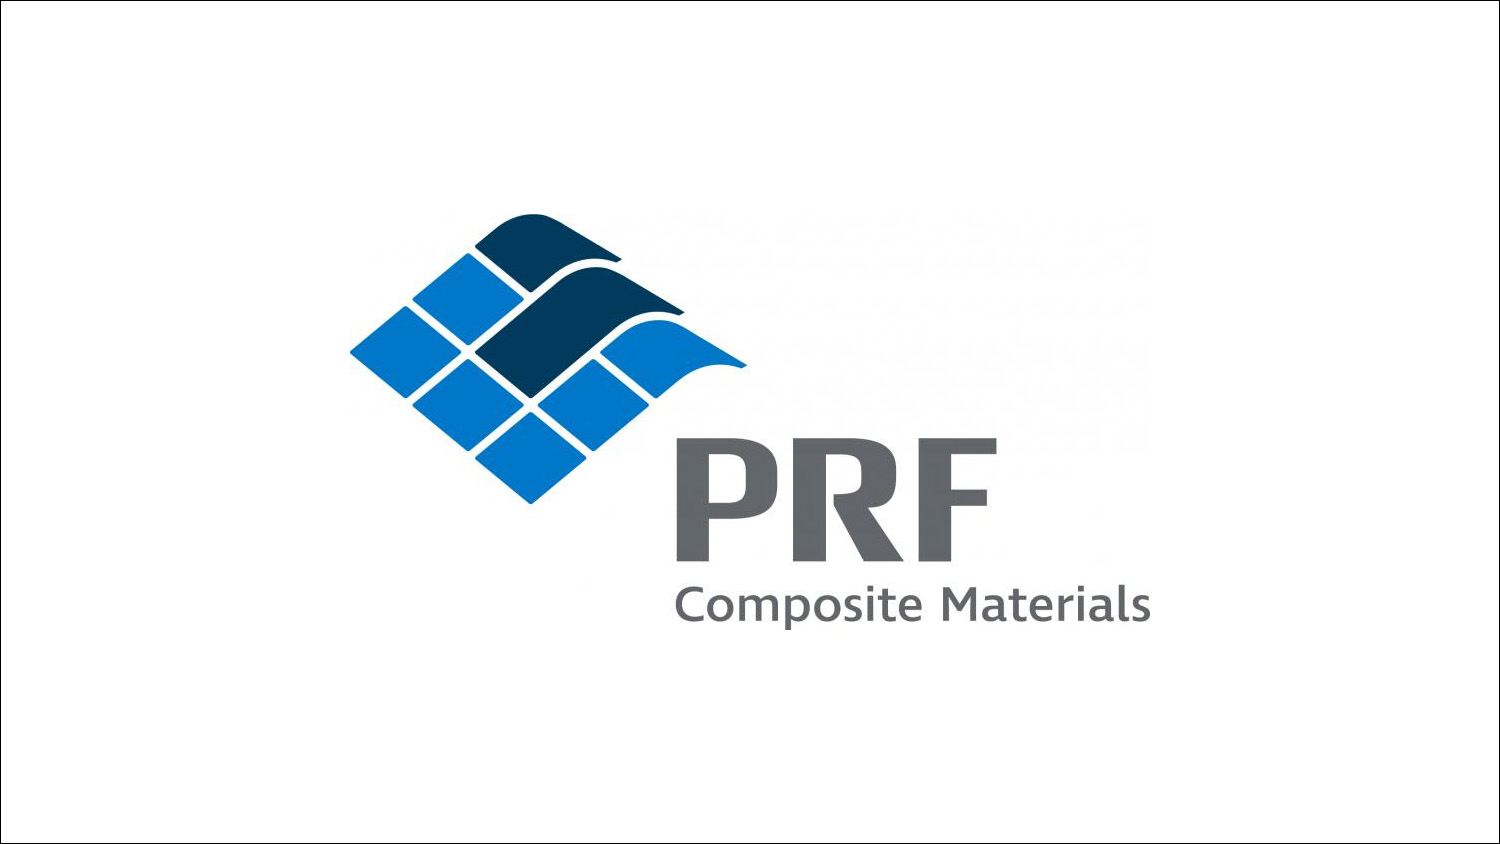 PRF Composite Materials Ltd